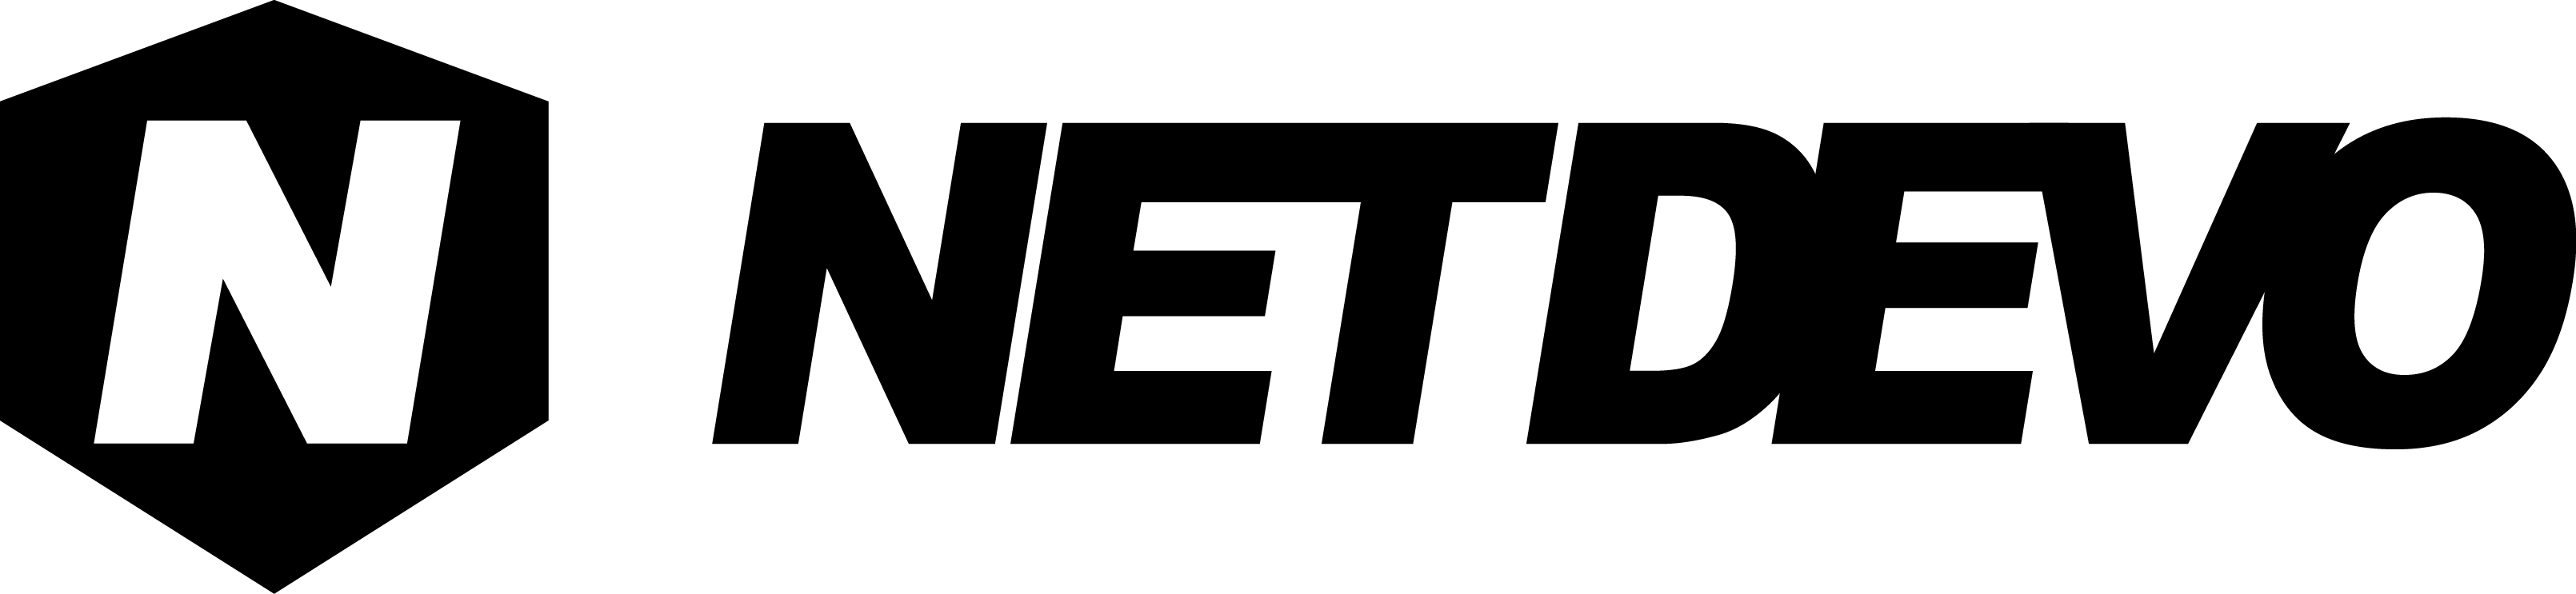 NetDevo Logo Black PNG